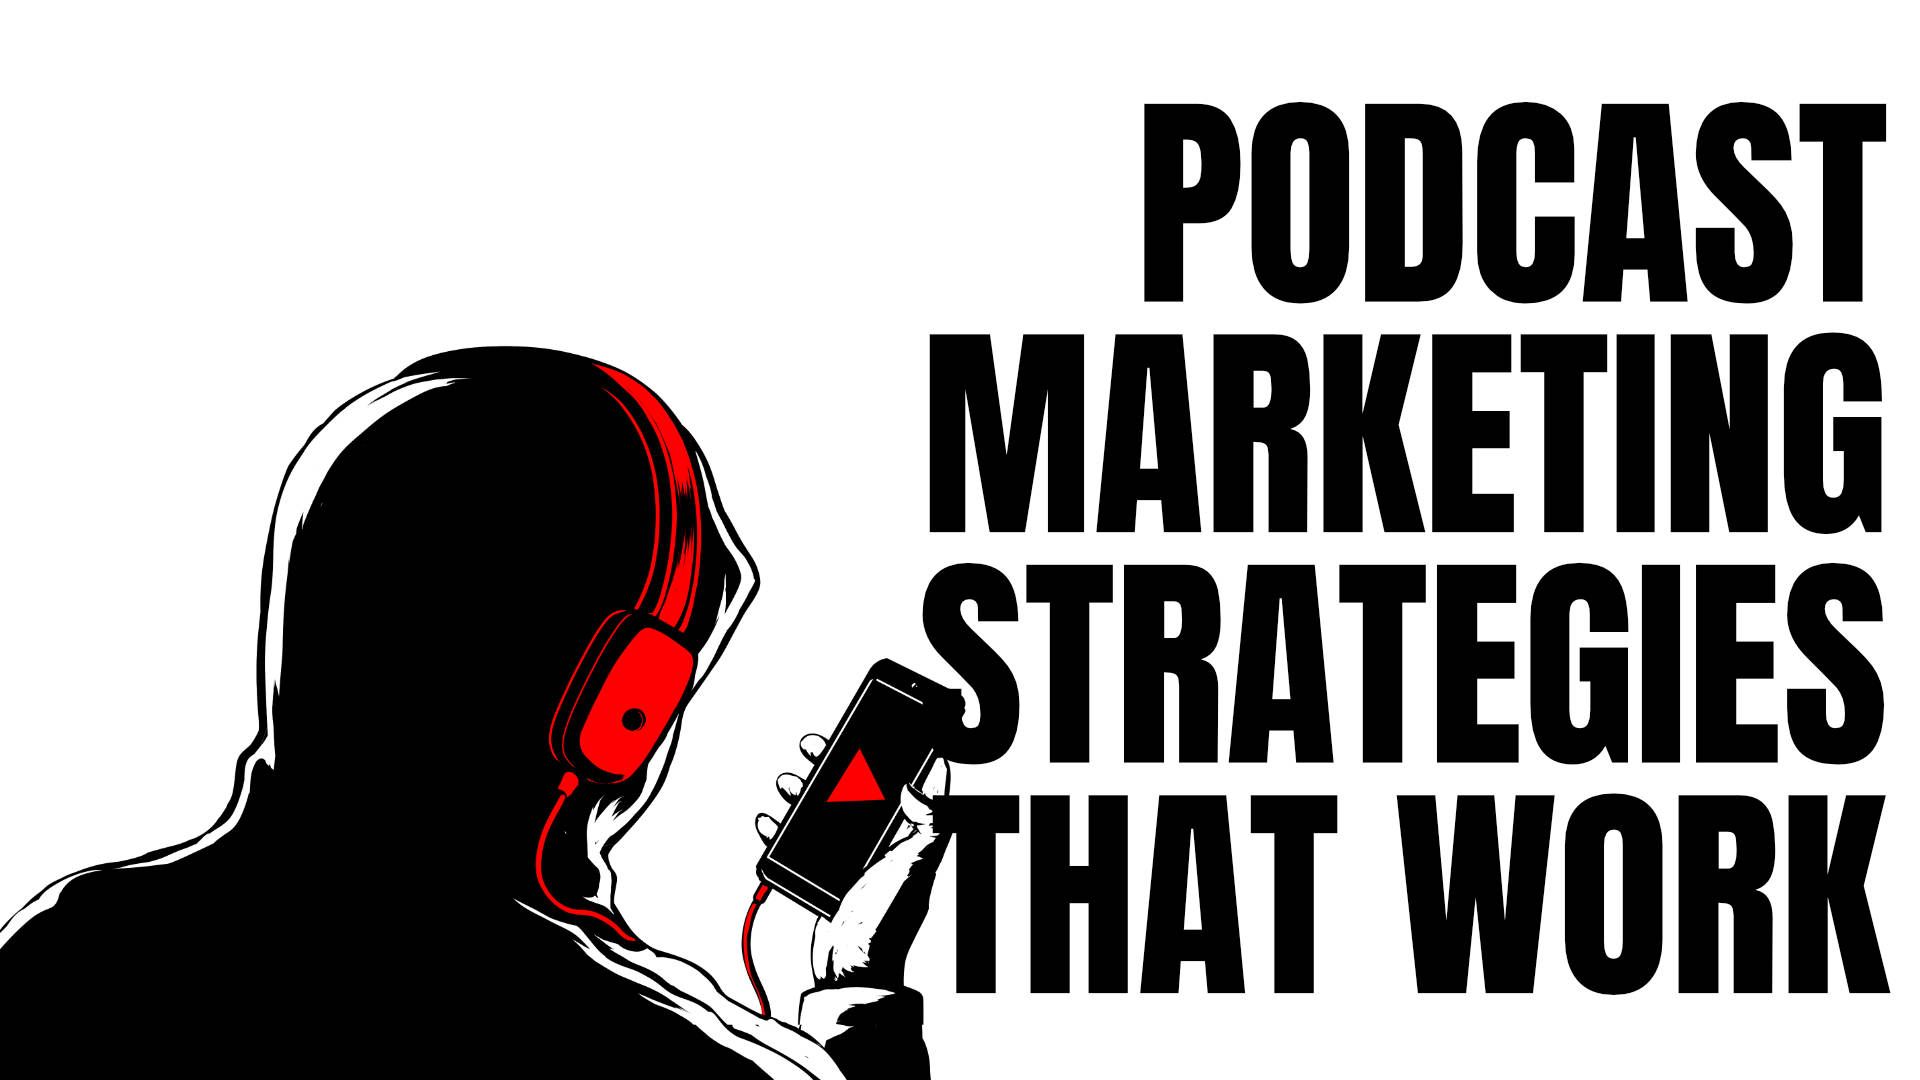 Podcast Marketing Strategies That Work